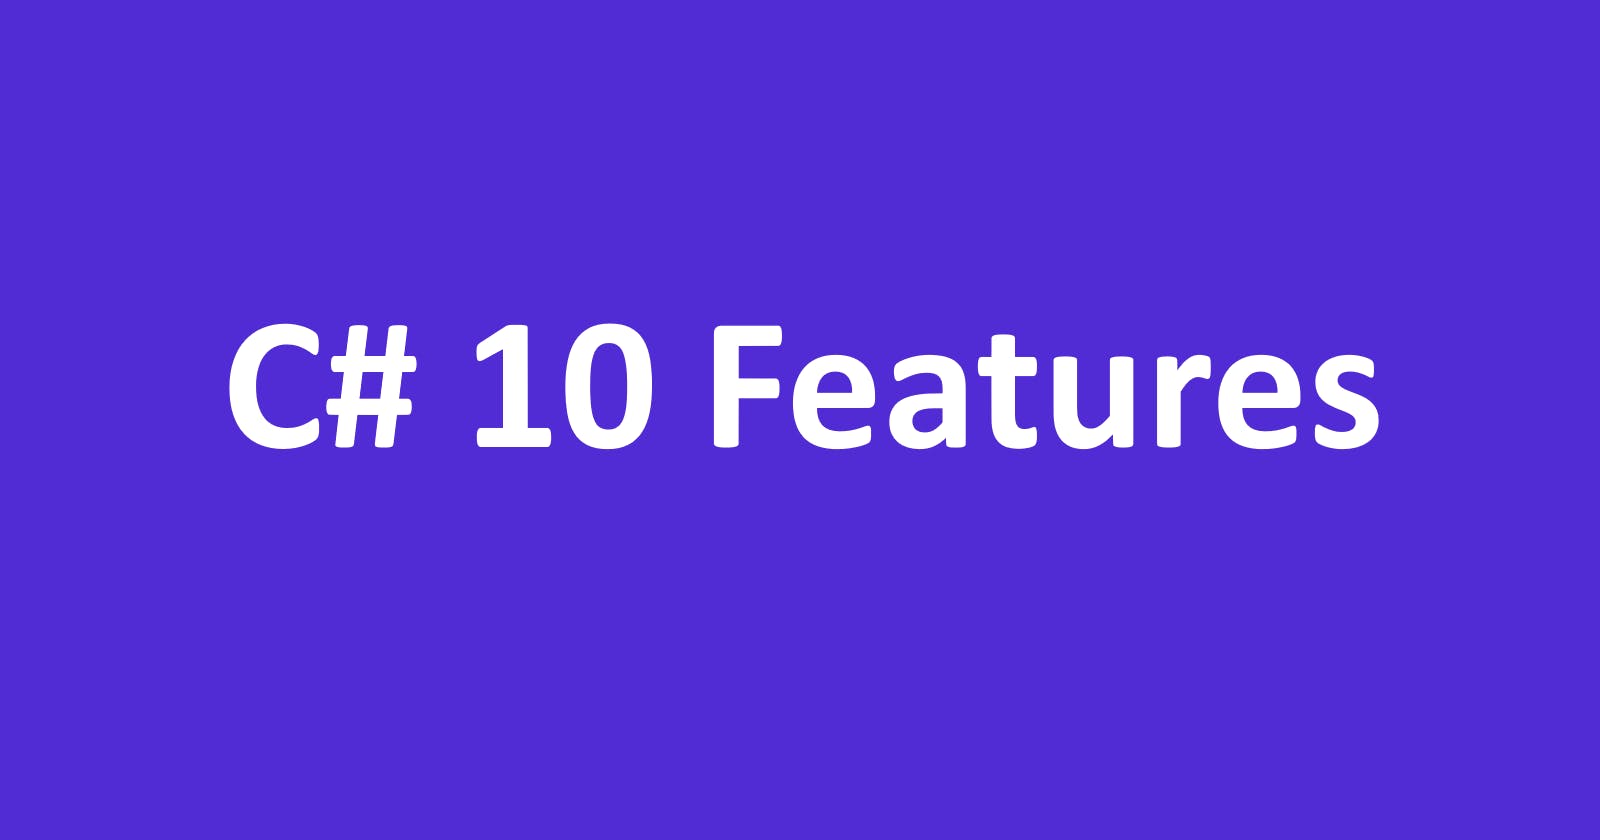 Thirteen C# 10 Features